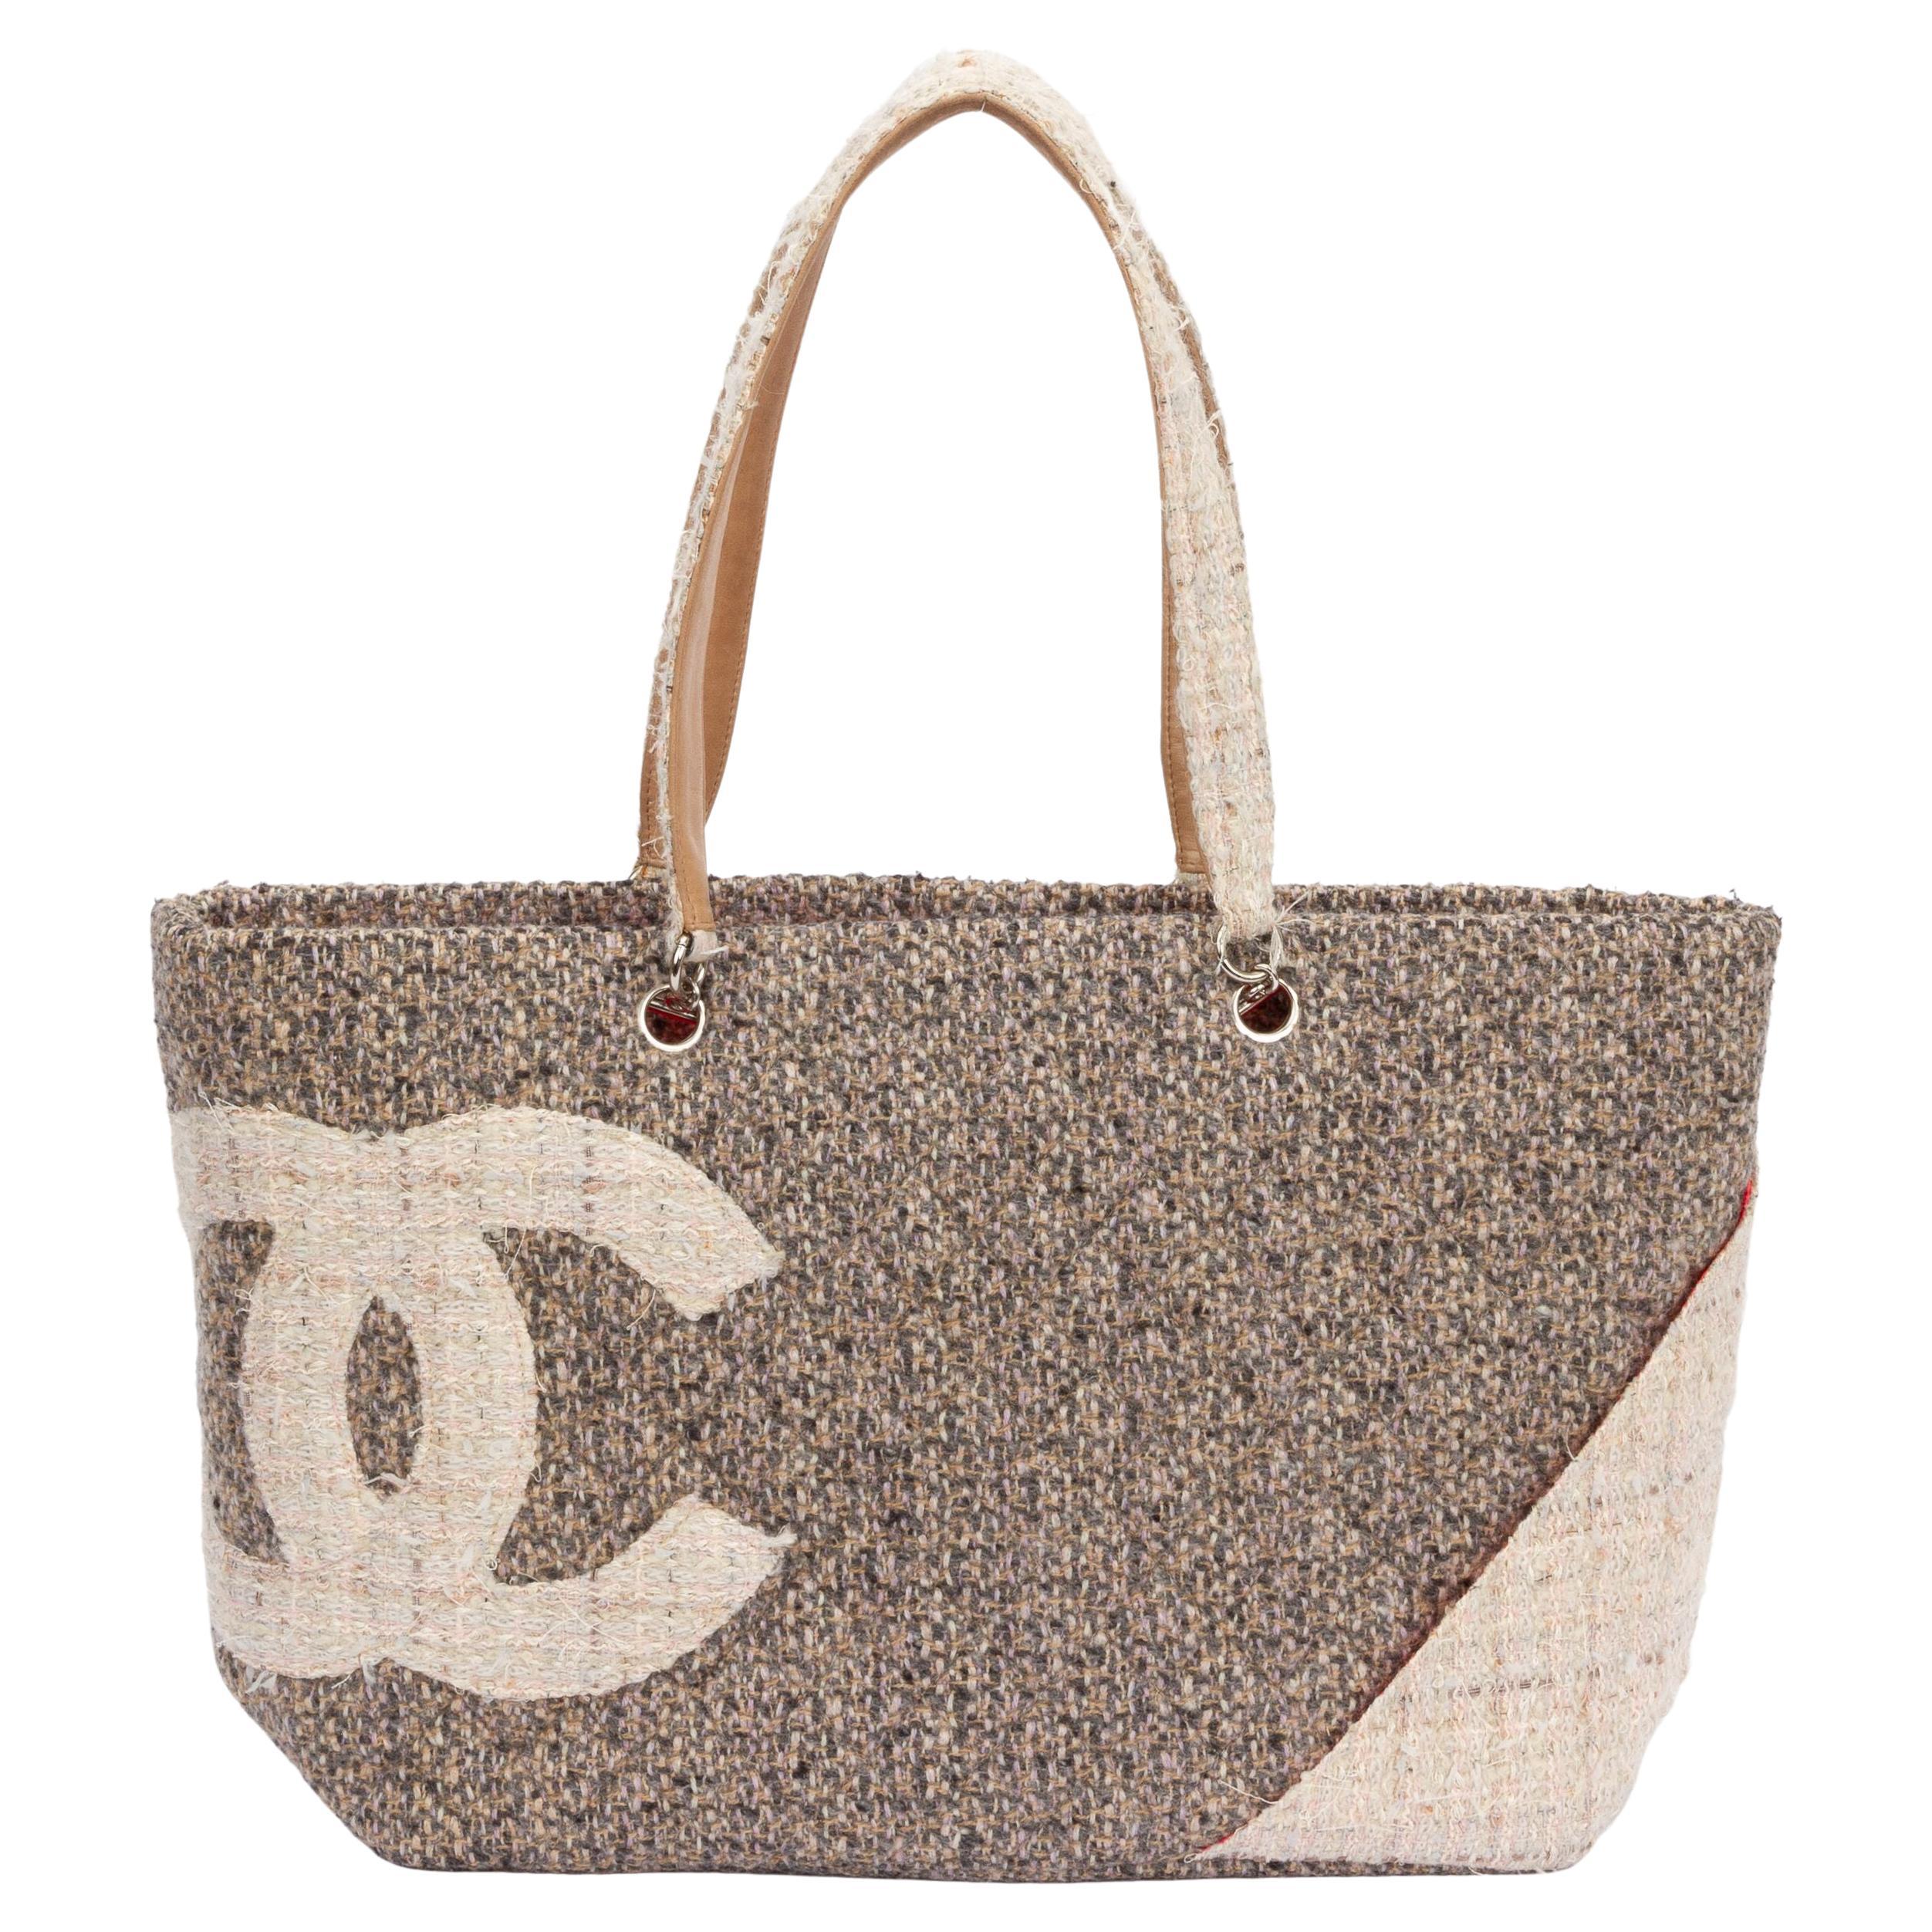 Chanel Shopper Bag - 300 For Sale on 1stDibs